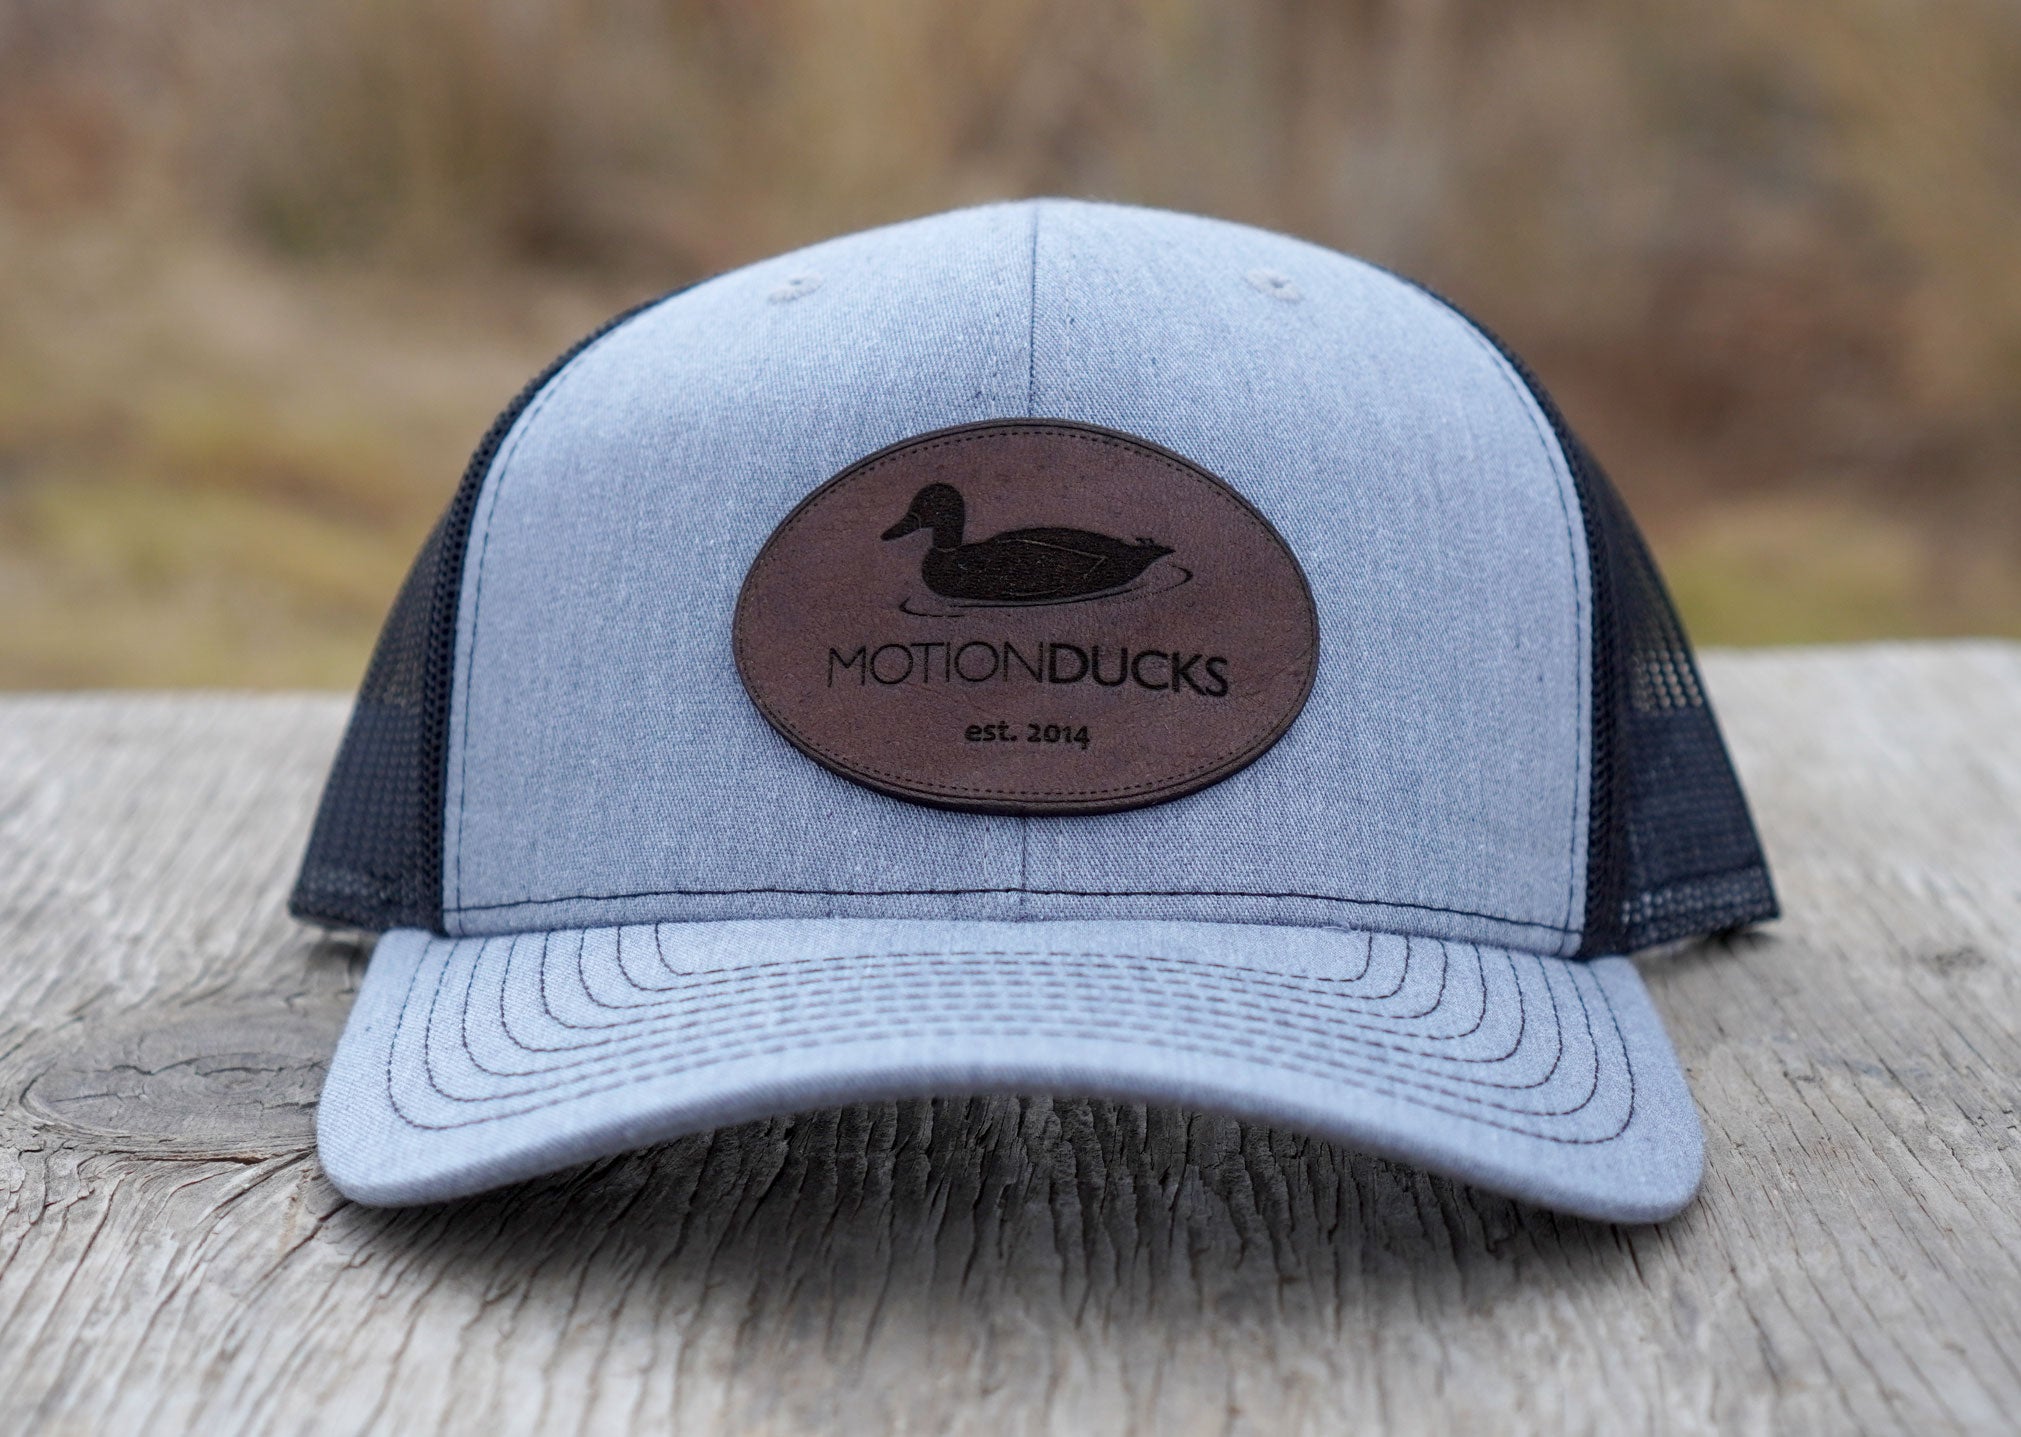 Ducks, with Motion - Leather LLC Vintage-Camo Hat Elk Patch